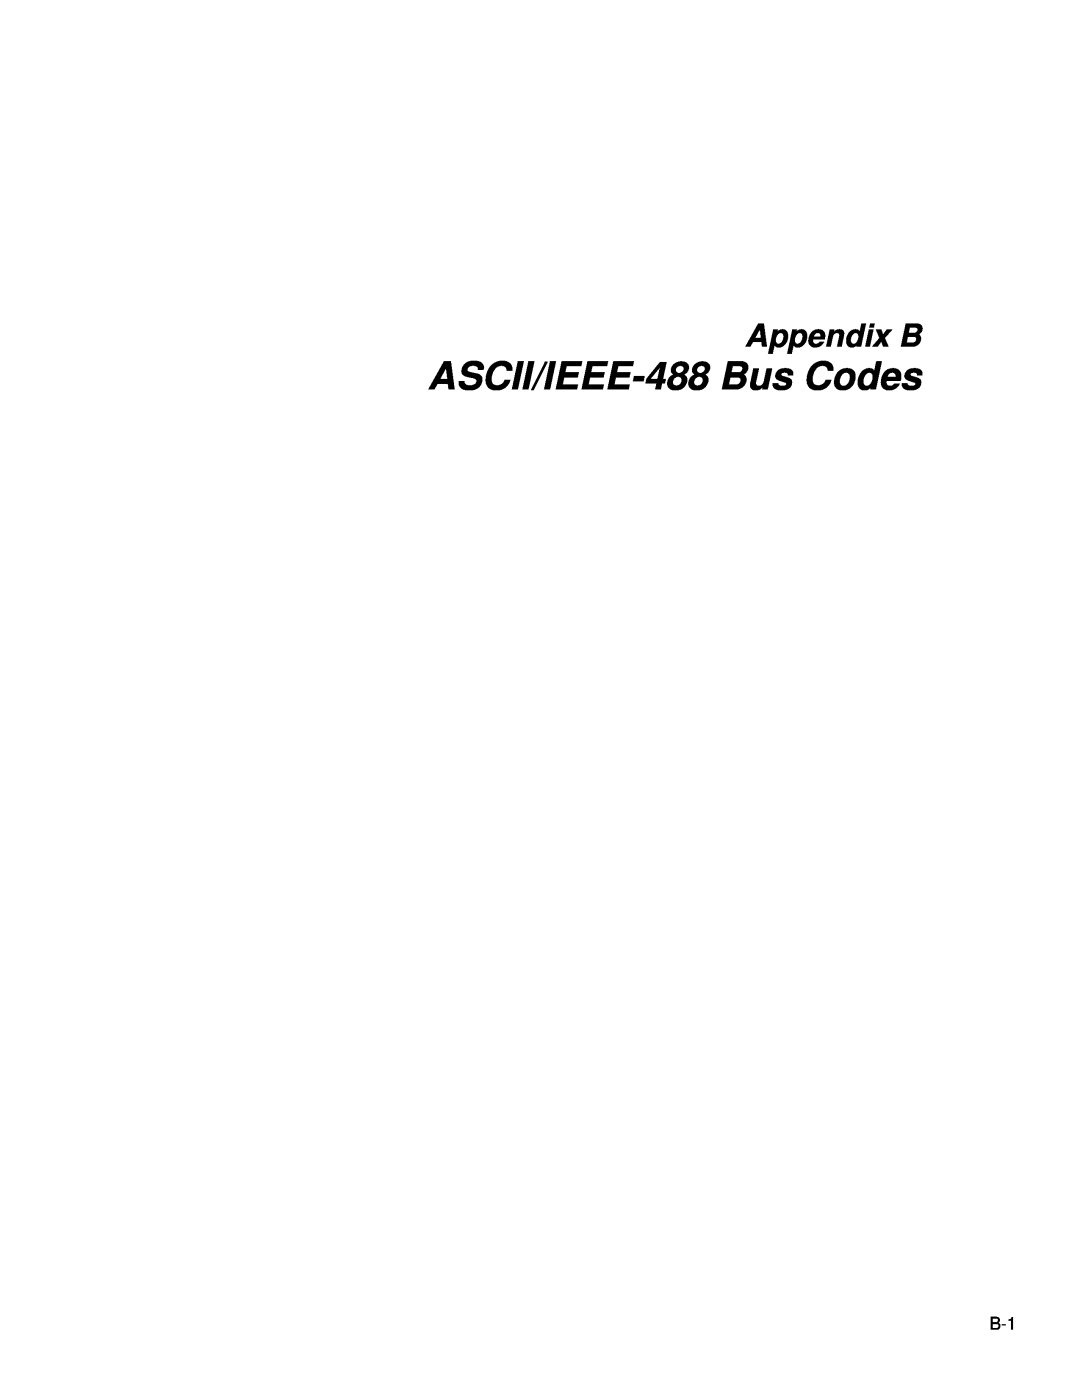 Fluke 45 user manual ASCII/IEEE-488Bus Codes, Appendix B 